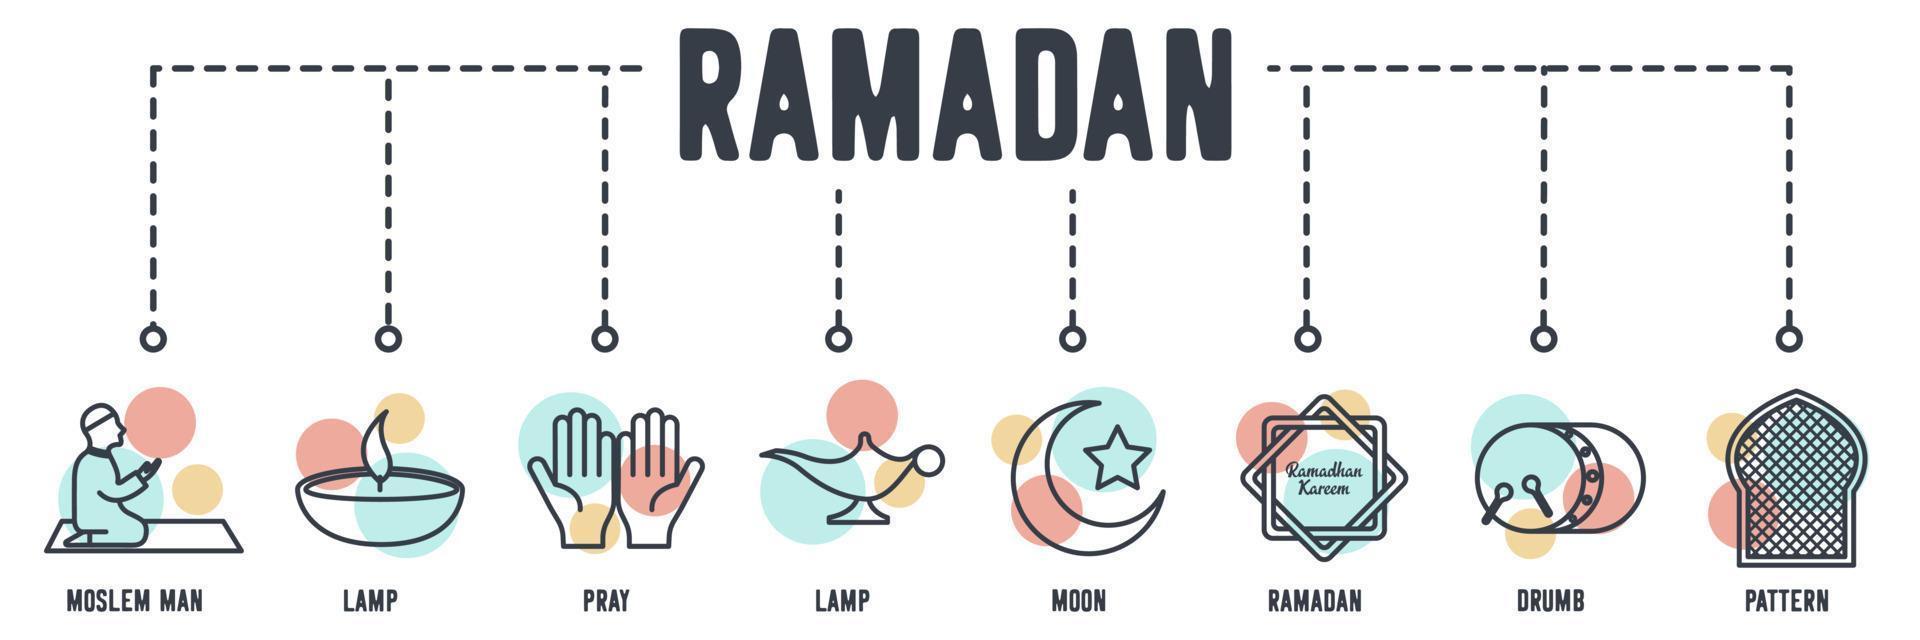 ramadan arabic islamic banner web icon. Moslem man, Lamp, Pray, Lamp, Moon, Ramadhan kareem, Drumb mosque, Pattern on mosque vector illustration concept.